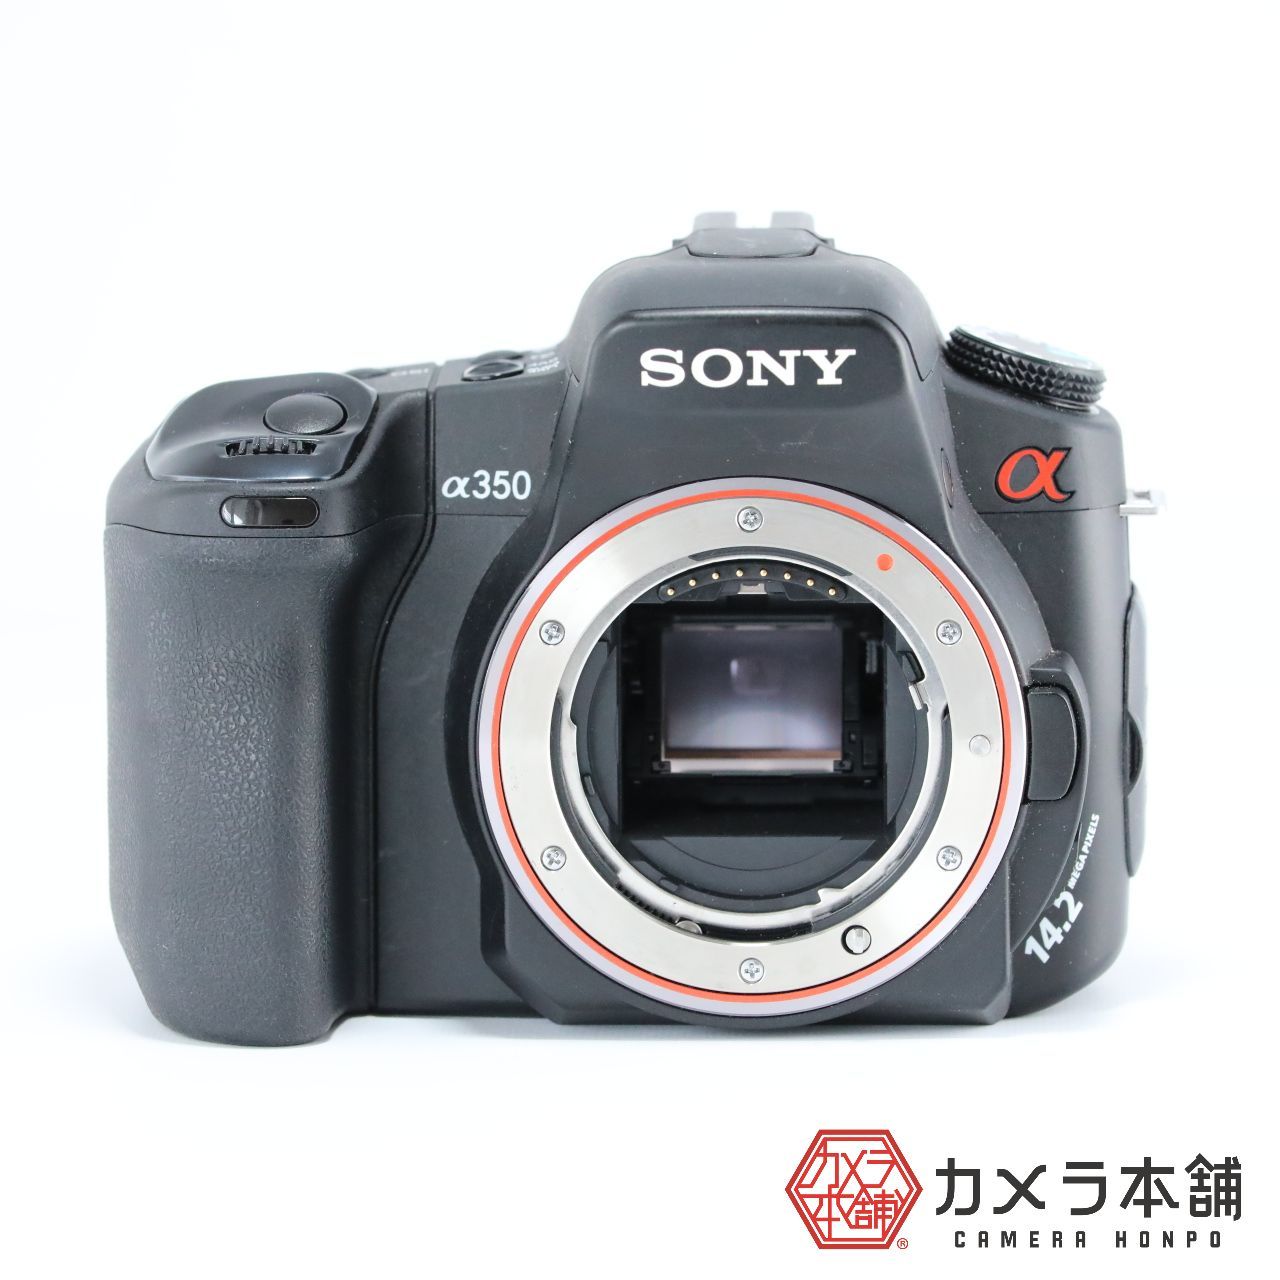 SONY ソニー デジタル一眼レフ α350 ボディ DSLR-A350 カメラ本舗｜Camera honpo メルカリ